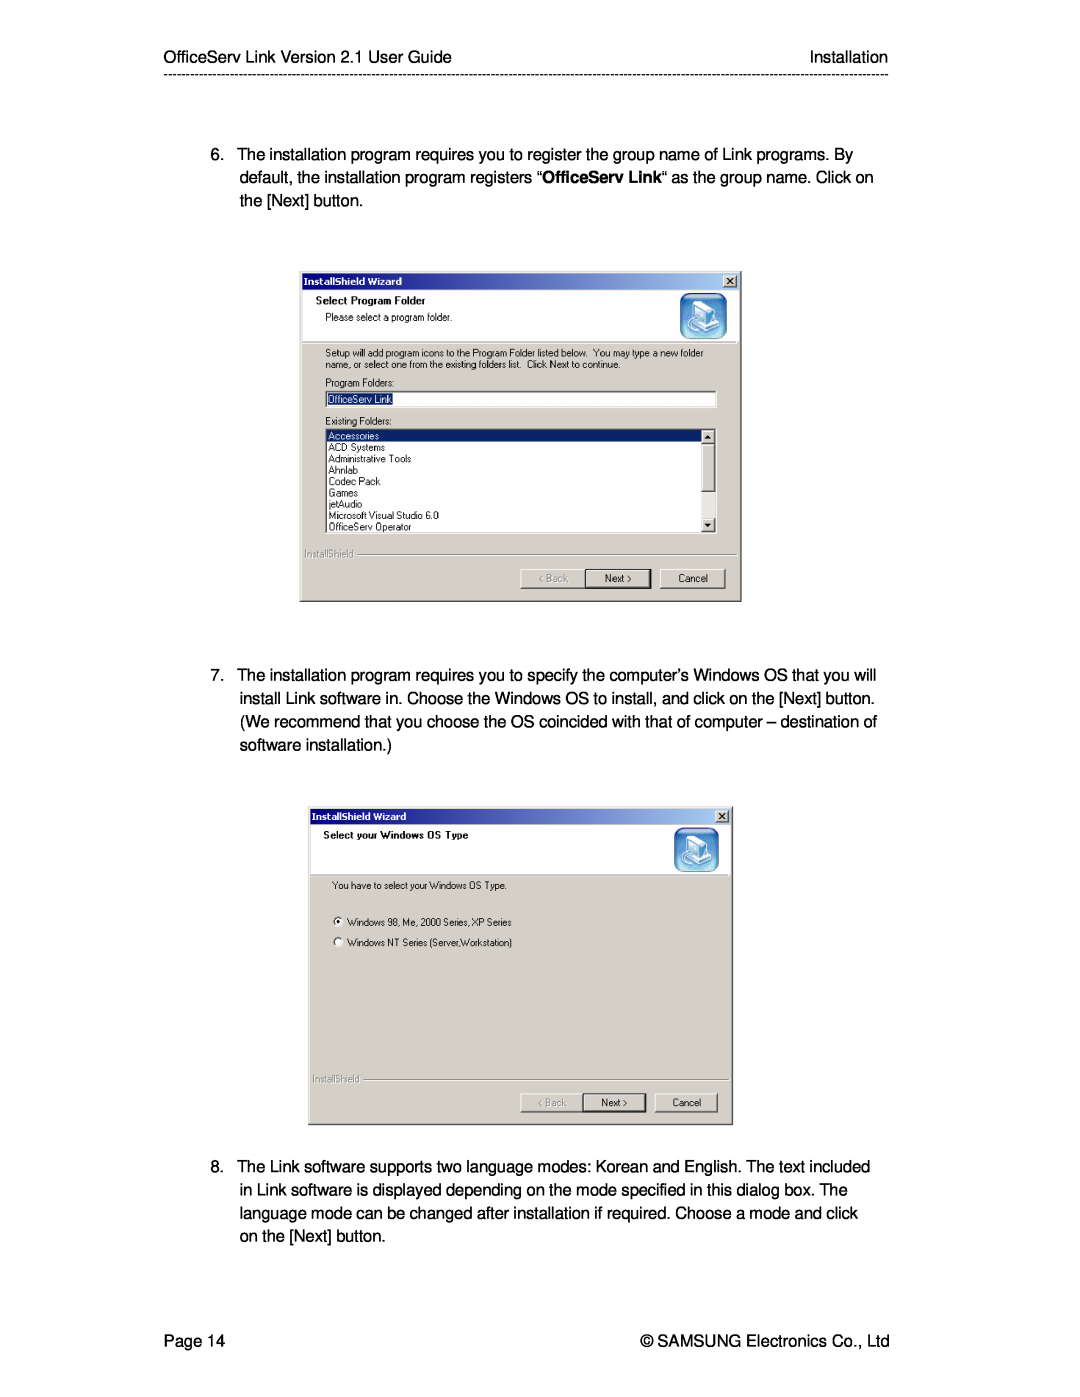 Samsung manual OfficeServ Link Version 2.1 User GuideInstallation, Page 